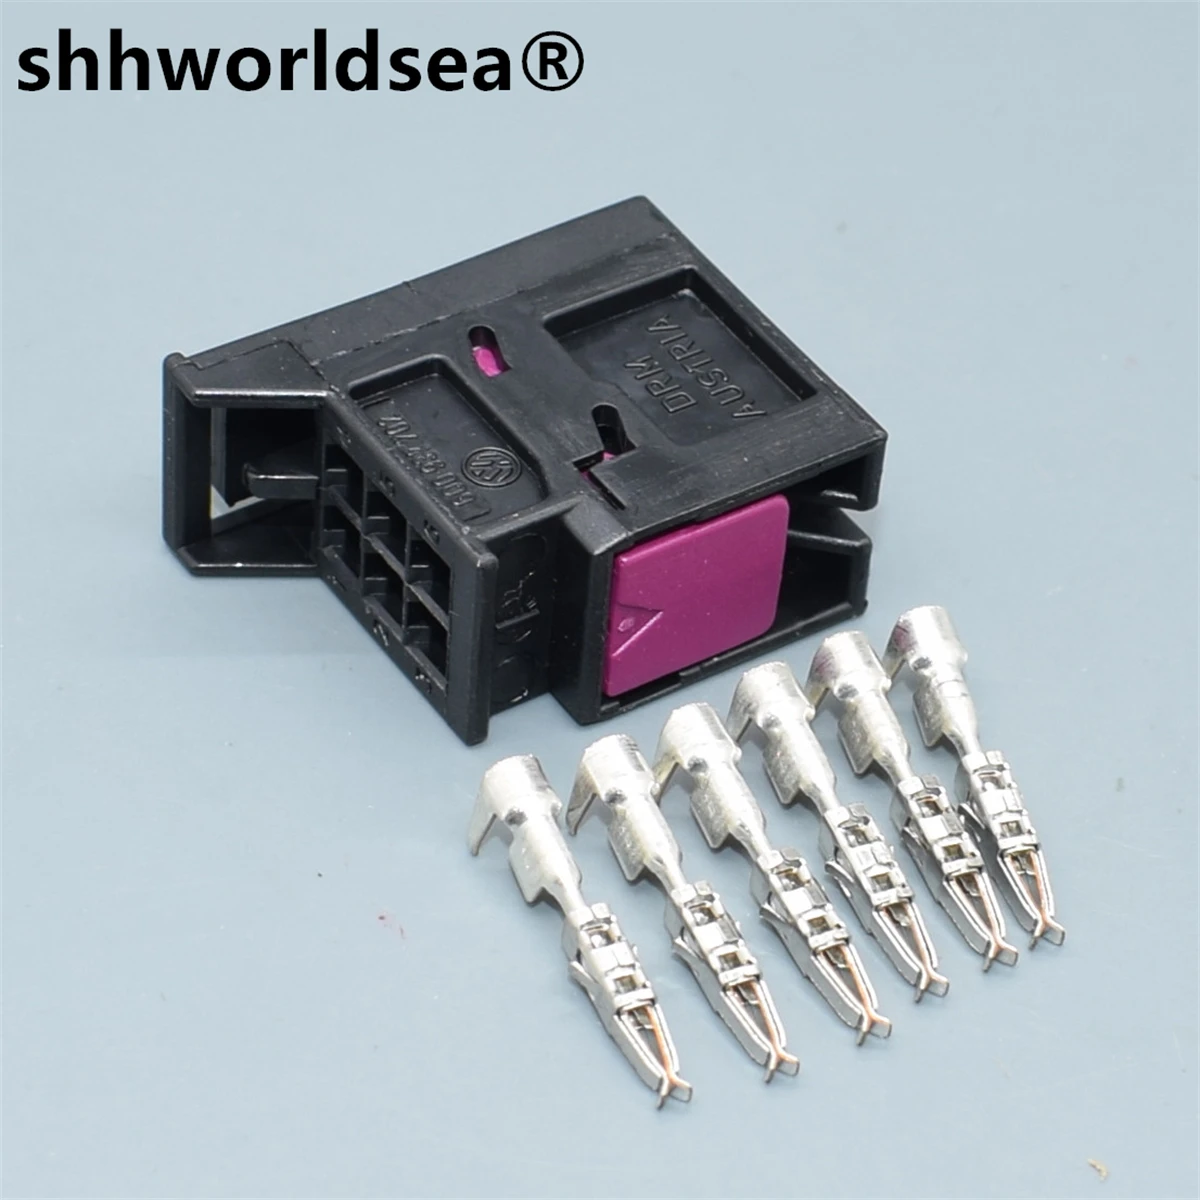 shhworldsea 1pcs 6PIN 1.5mm Car Rear Tail Lamp Plug For Audi A1 Q3 6Q0 937 702 6pin CABLE 6Q0937702